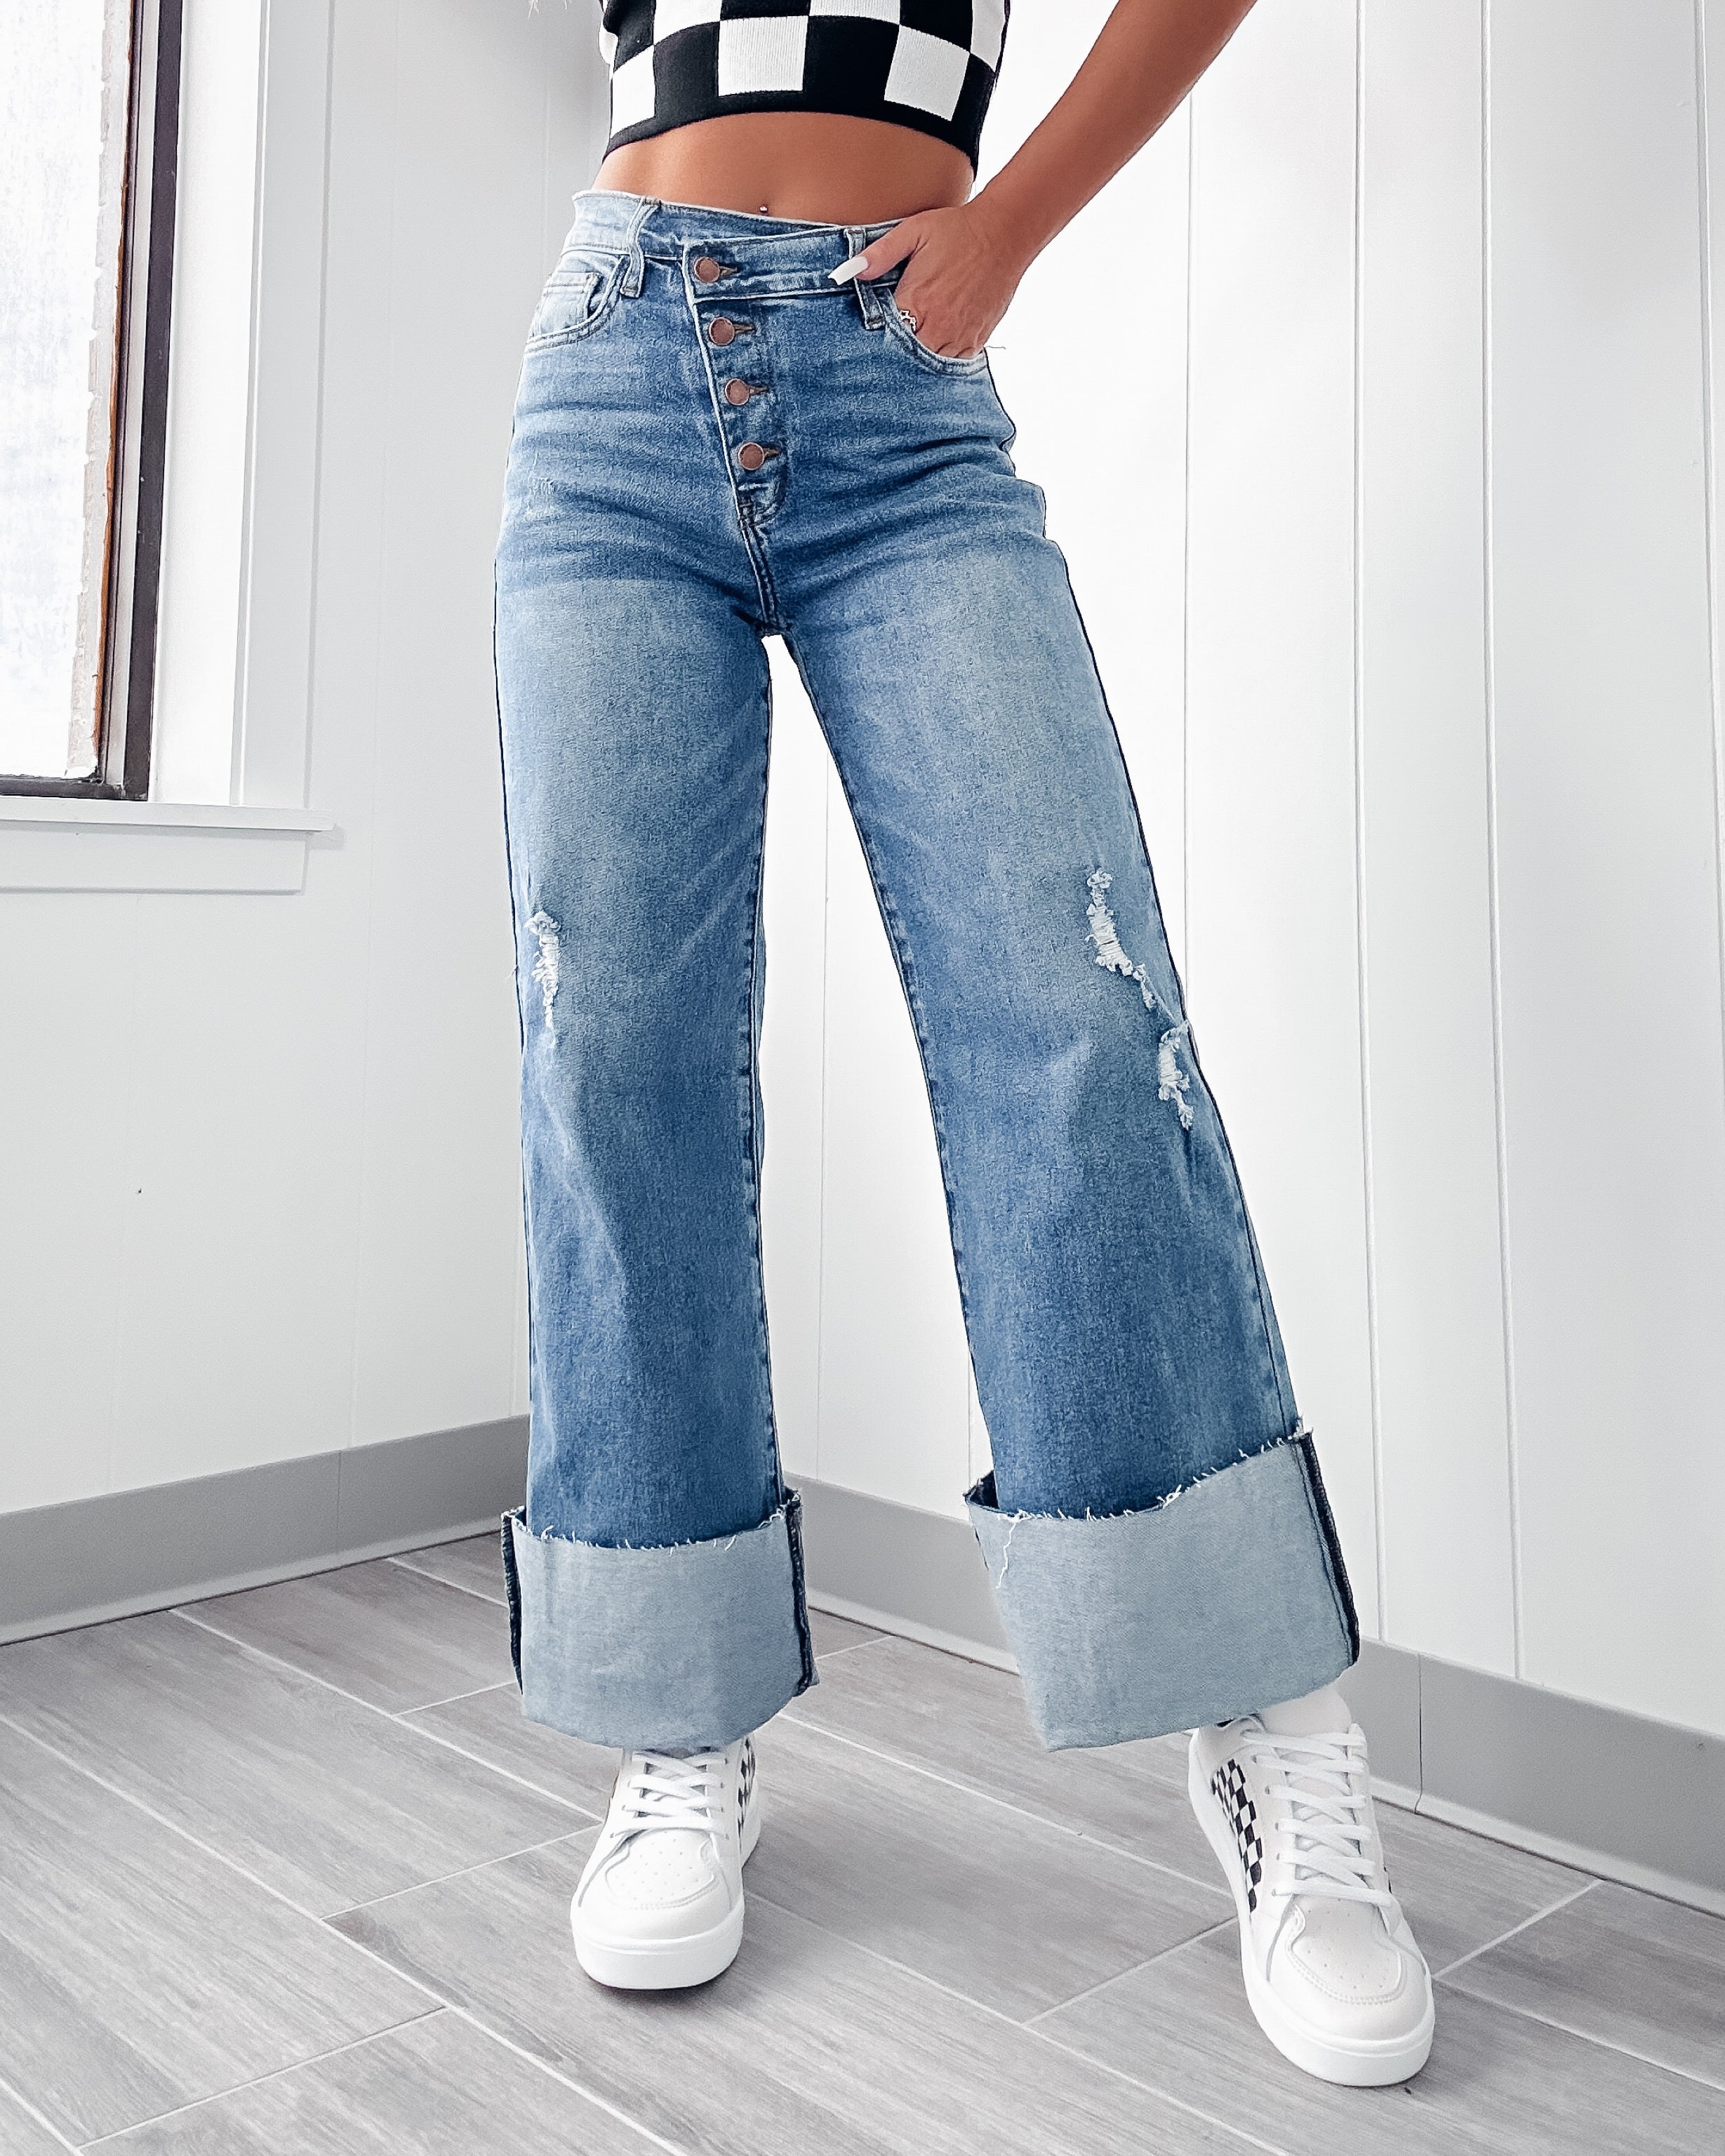 Addison Cross Over Button Jeans - Medium Wash